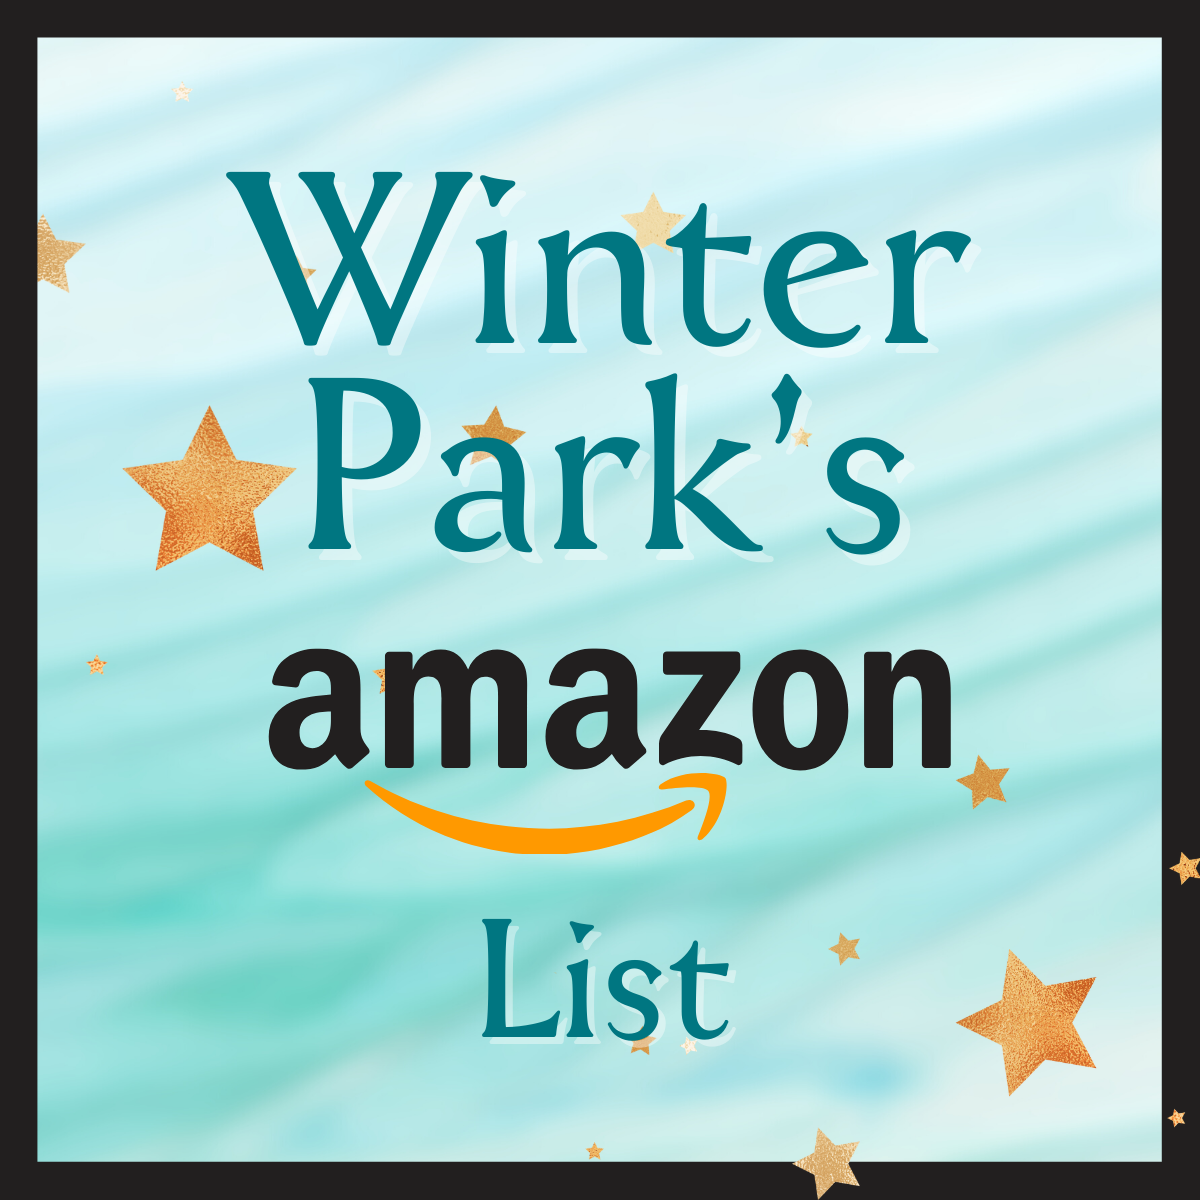 Winter Park Wish List